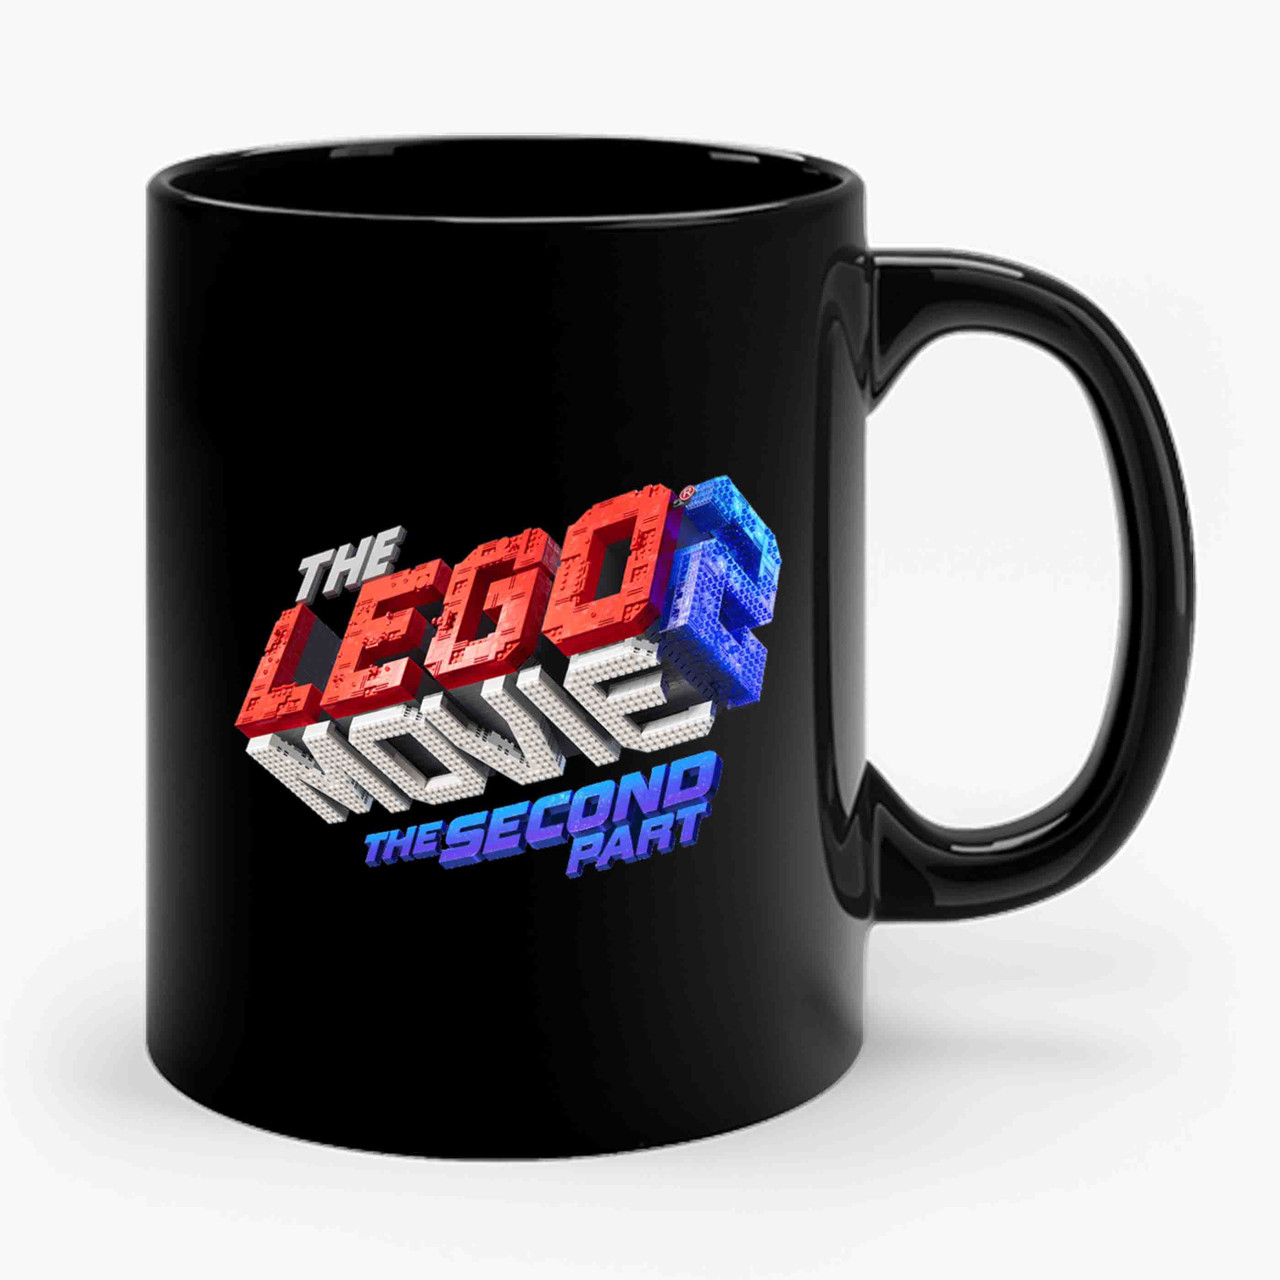 Lego Colors Coffee Mug